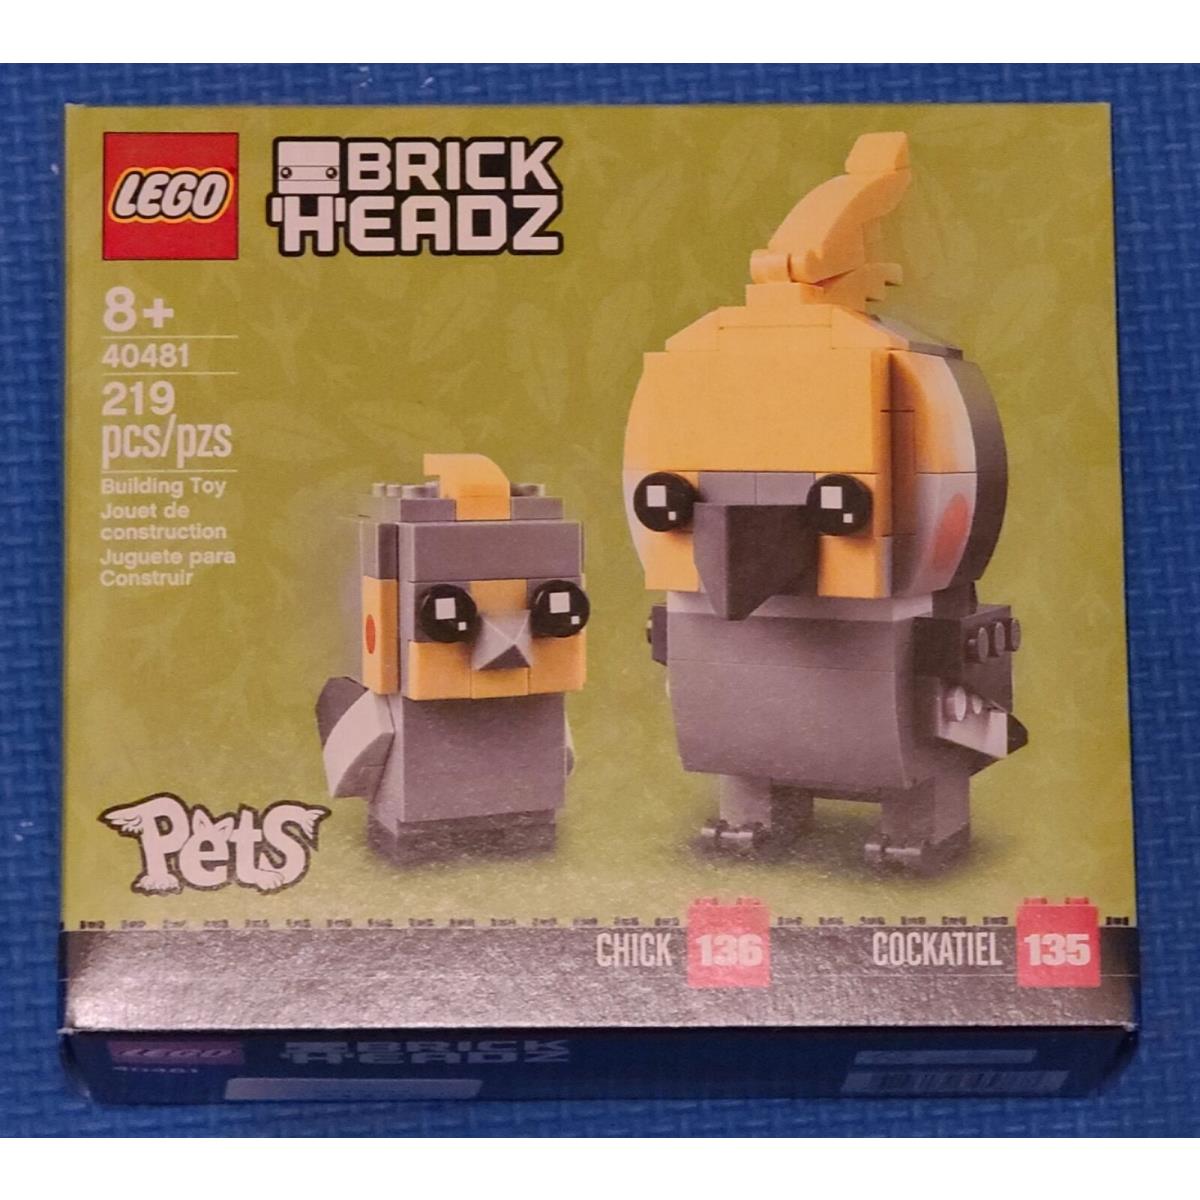 Lego 40481 Pets Brickheadz Chick and Cockatiel Set